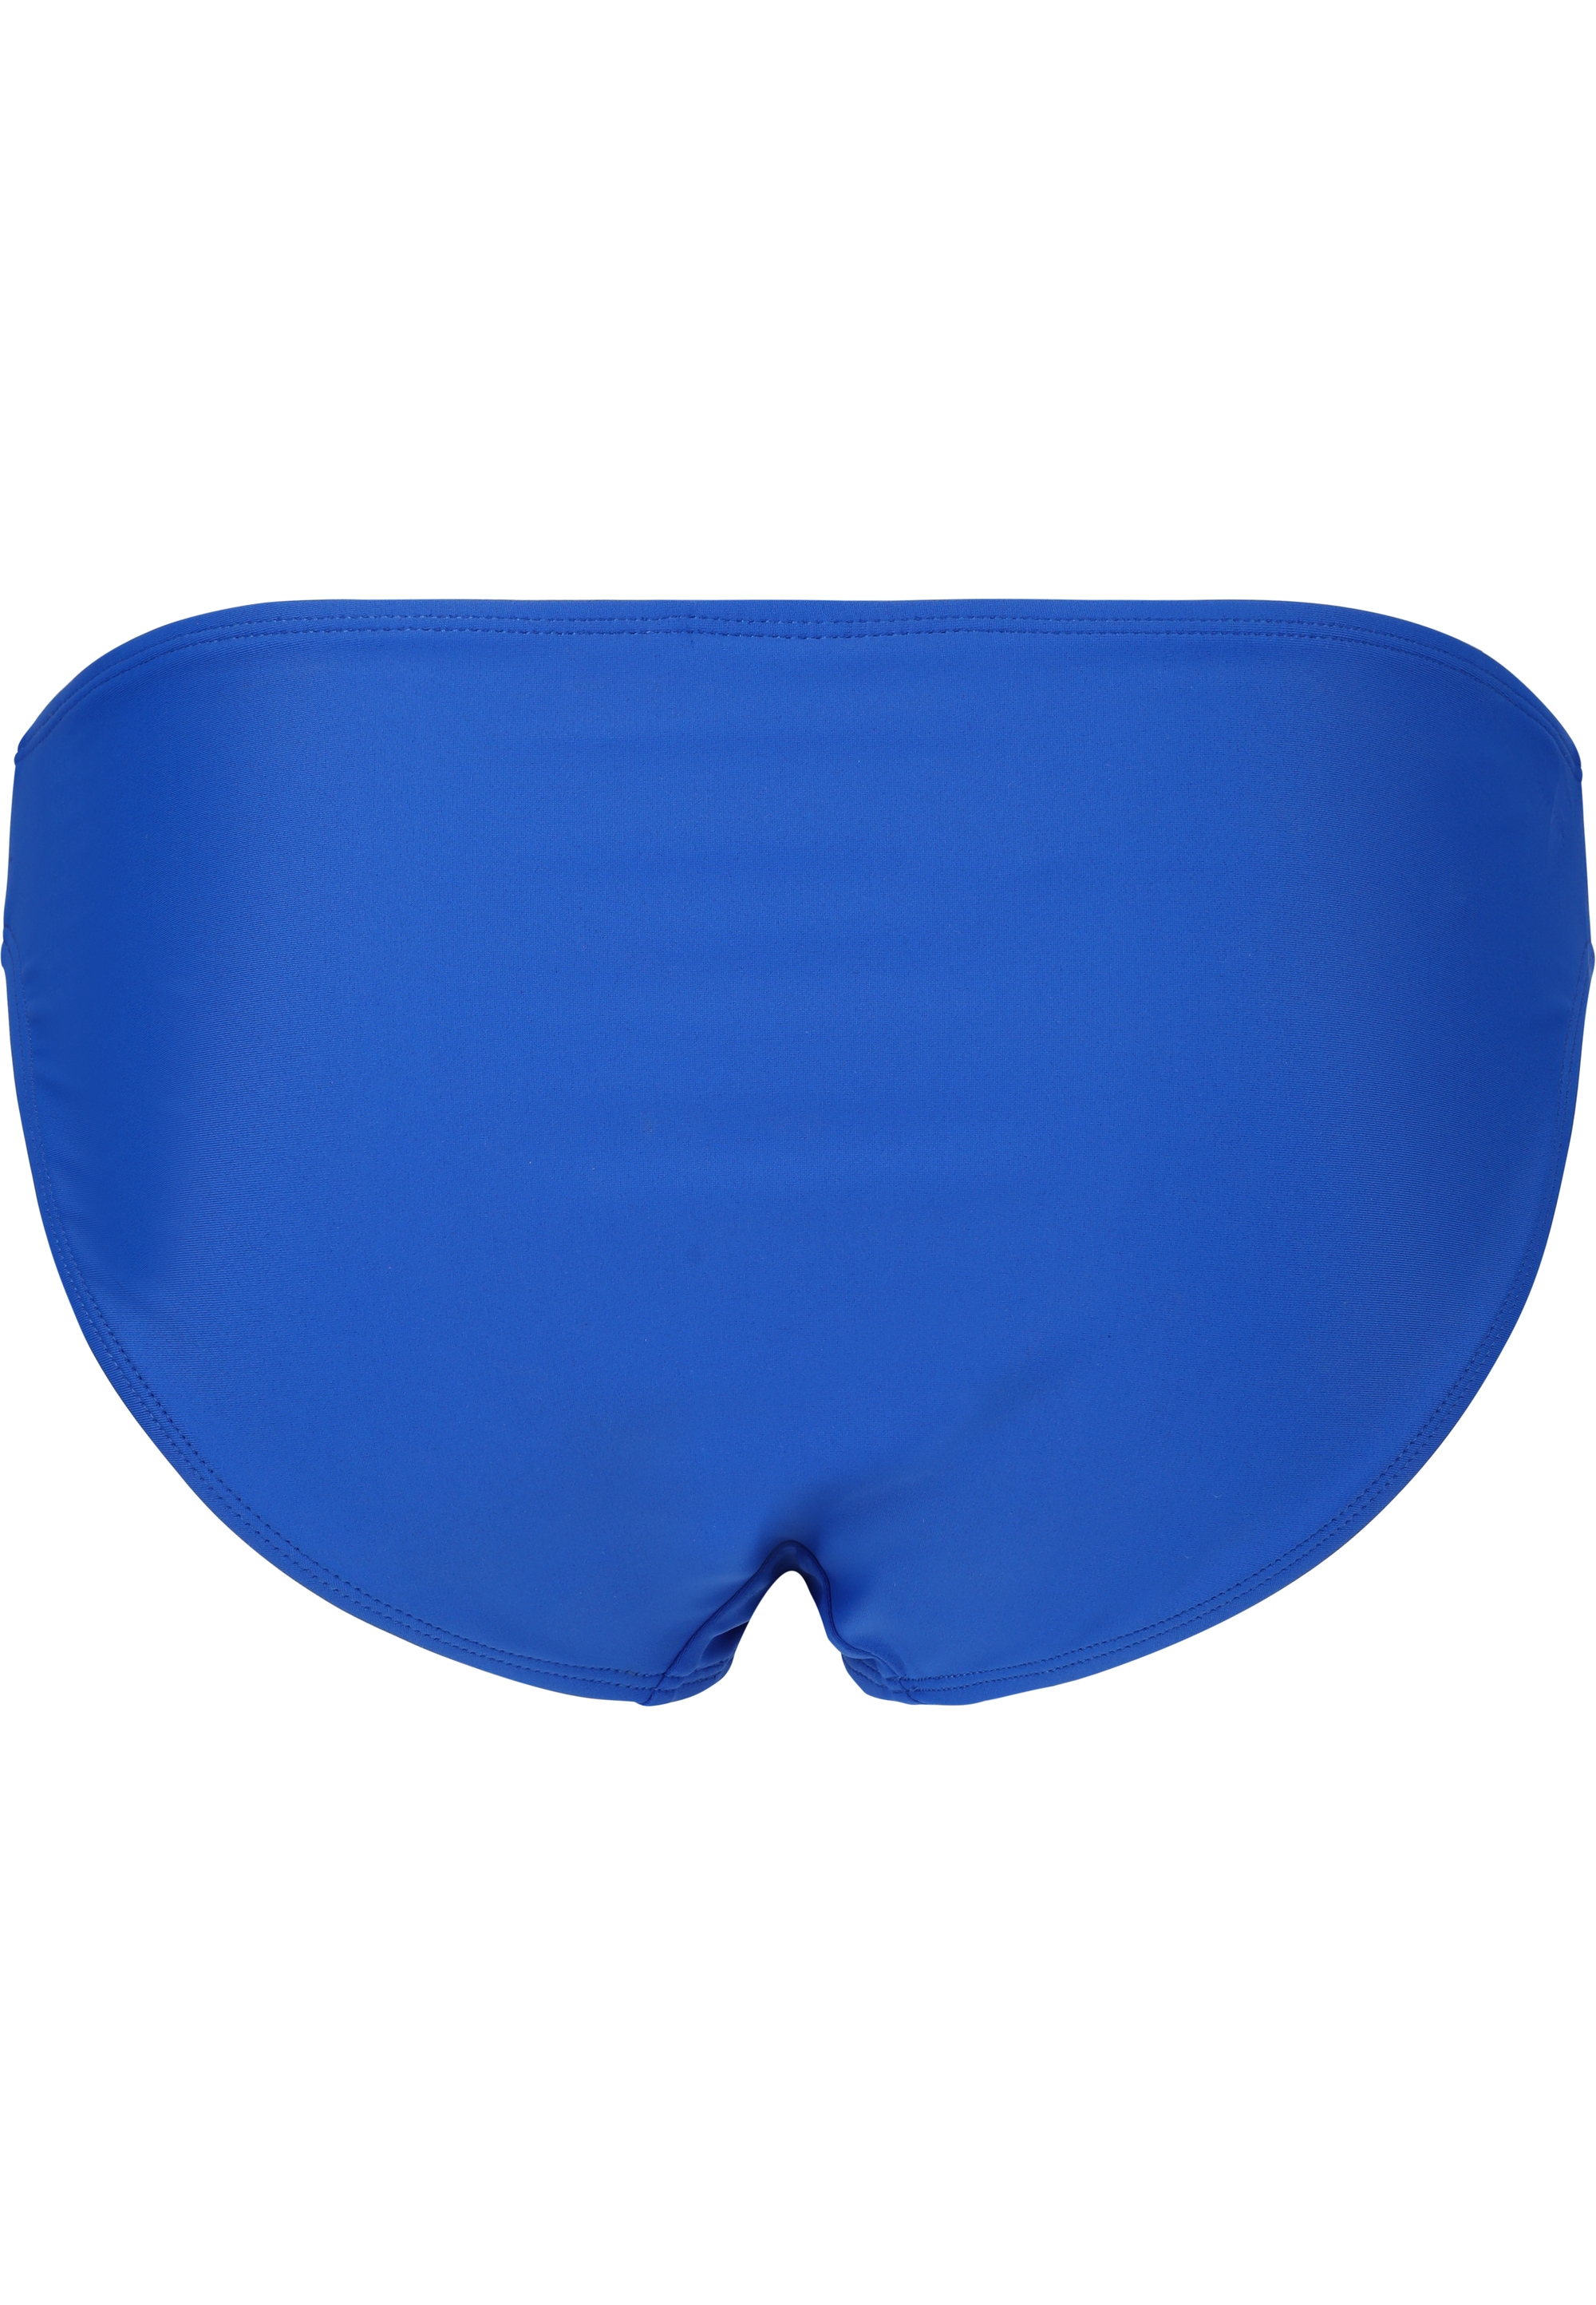 CRUZ Bikini-Hose »Aprilia«, (1 St., Panty), mit innovativer QUICK DRY-Technologie